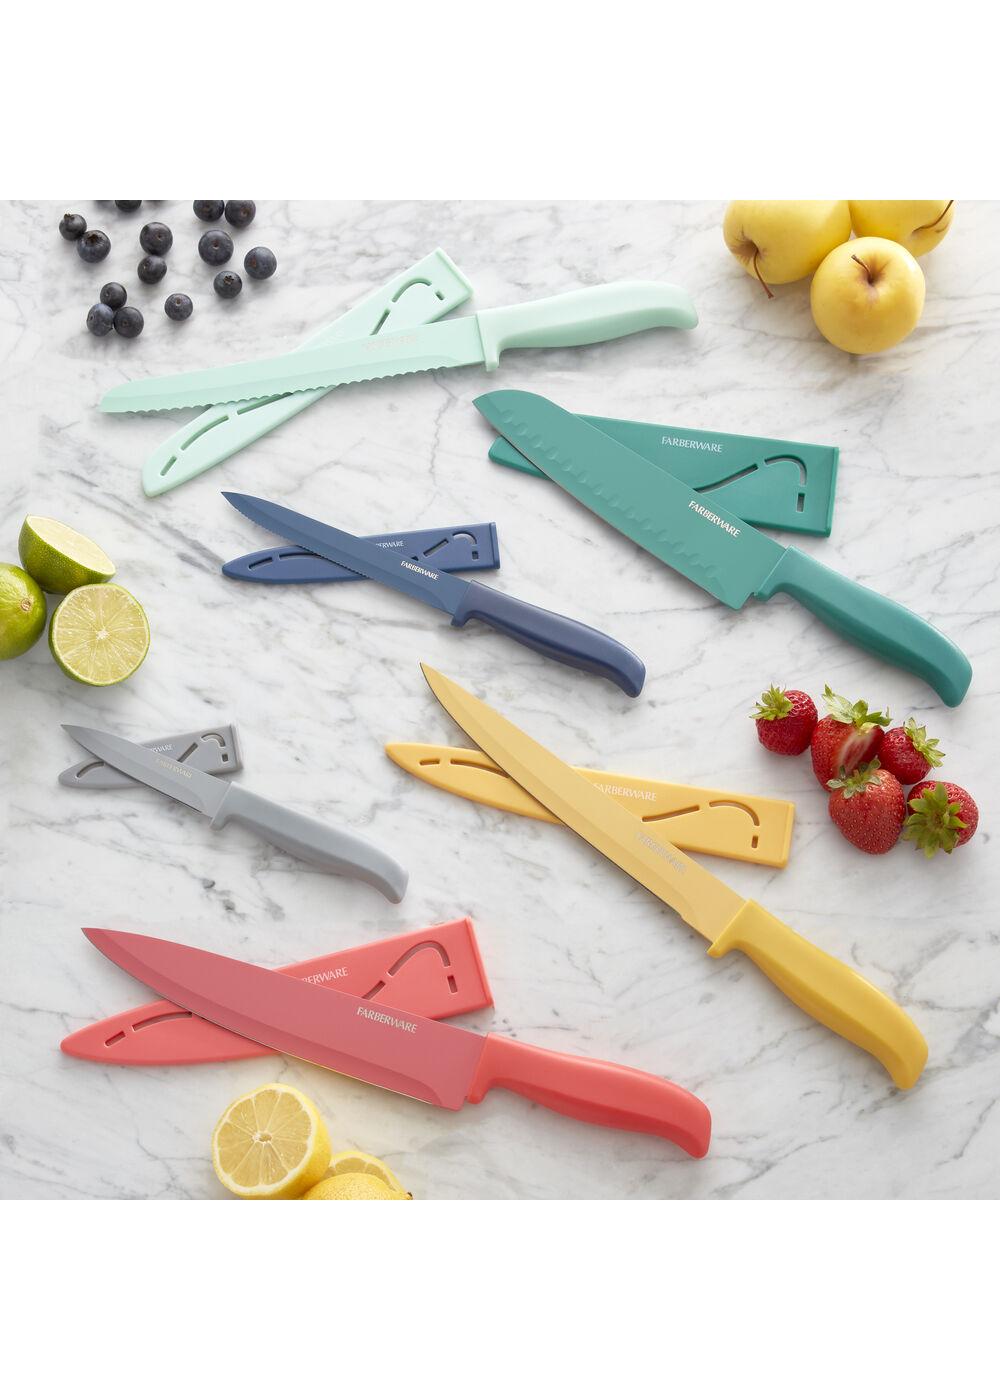 Farberware Soft Grip Cutlery Set - Shop Knives at H-E-B